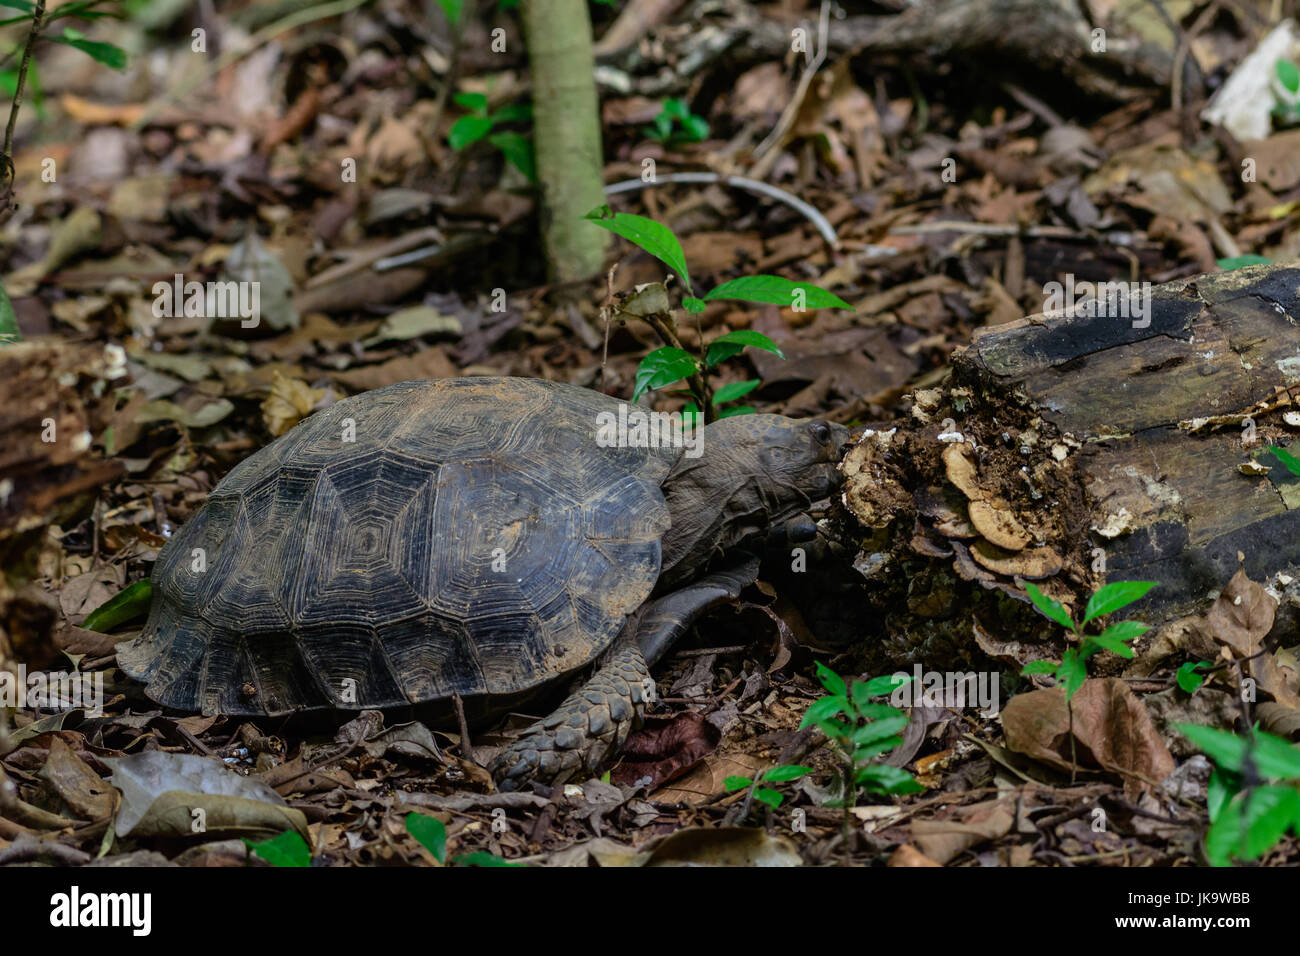 Manouria emys phayei or Asian Giant Tortoise in forest at Kaeng Krachan National Park, Thailand. Stock Photo